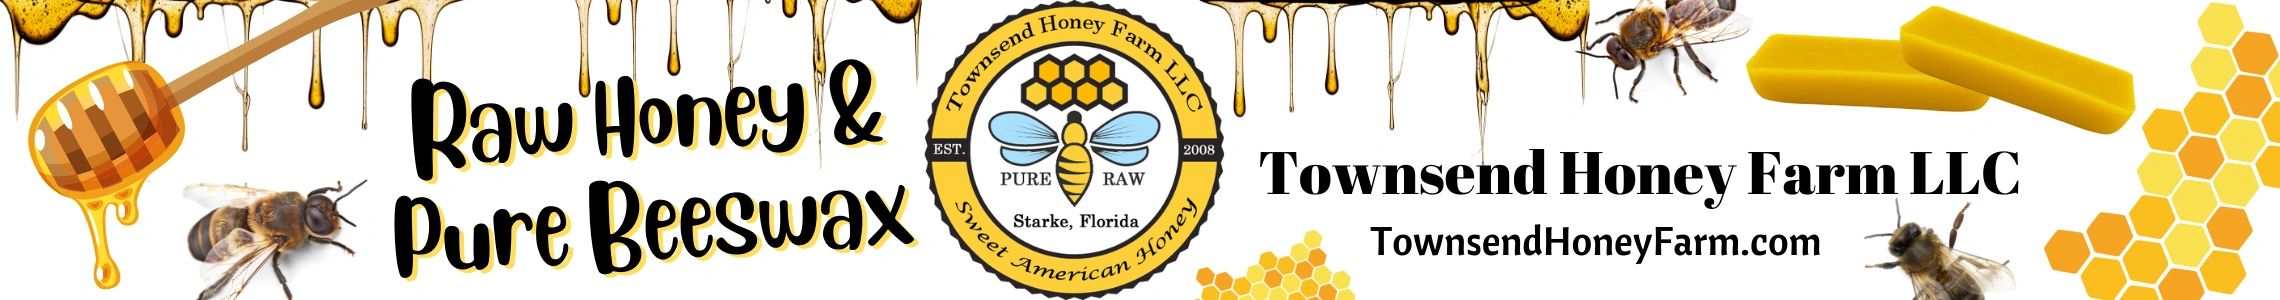 Townsend Honey Farm LLC banner